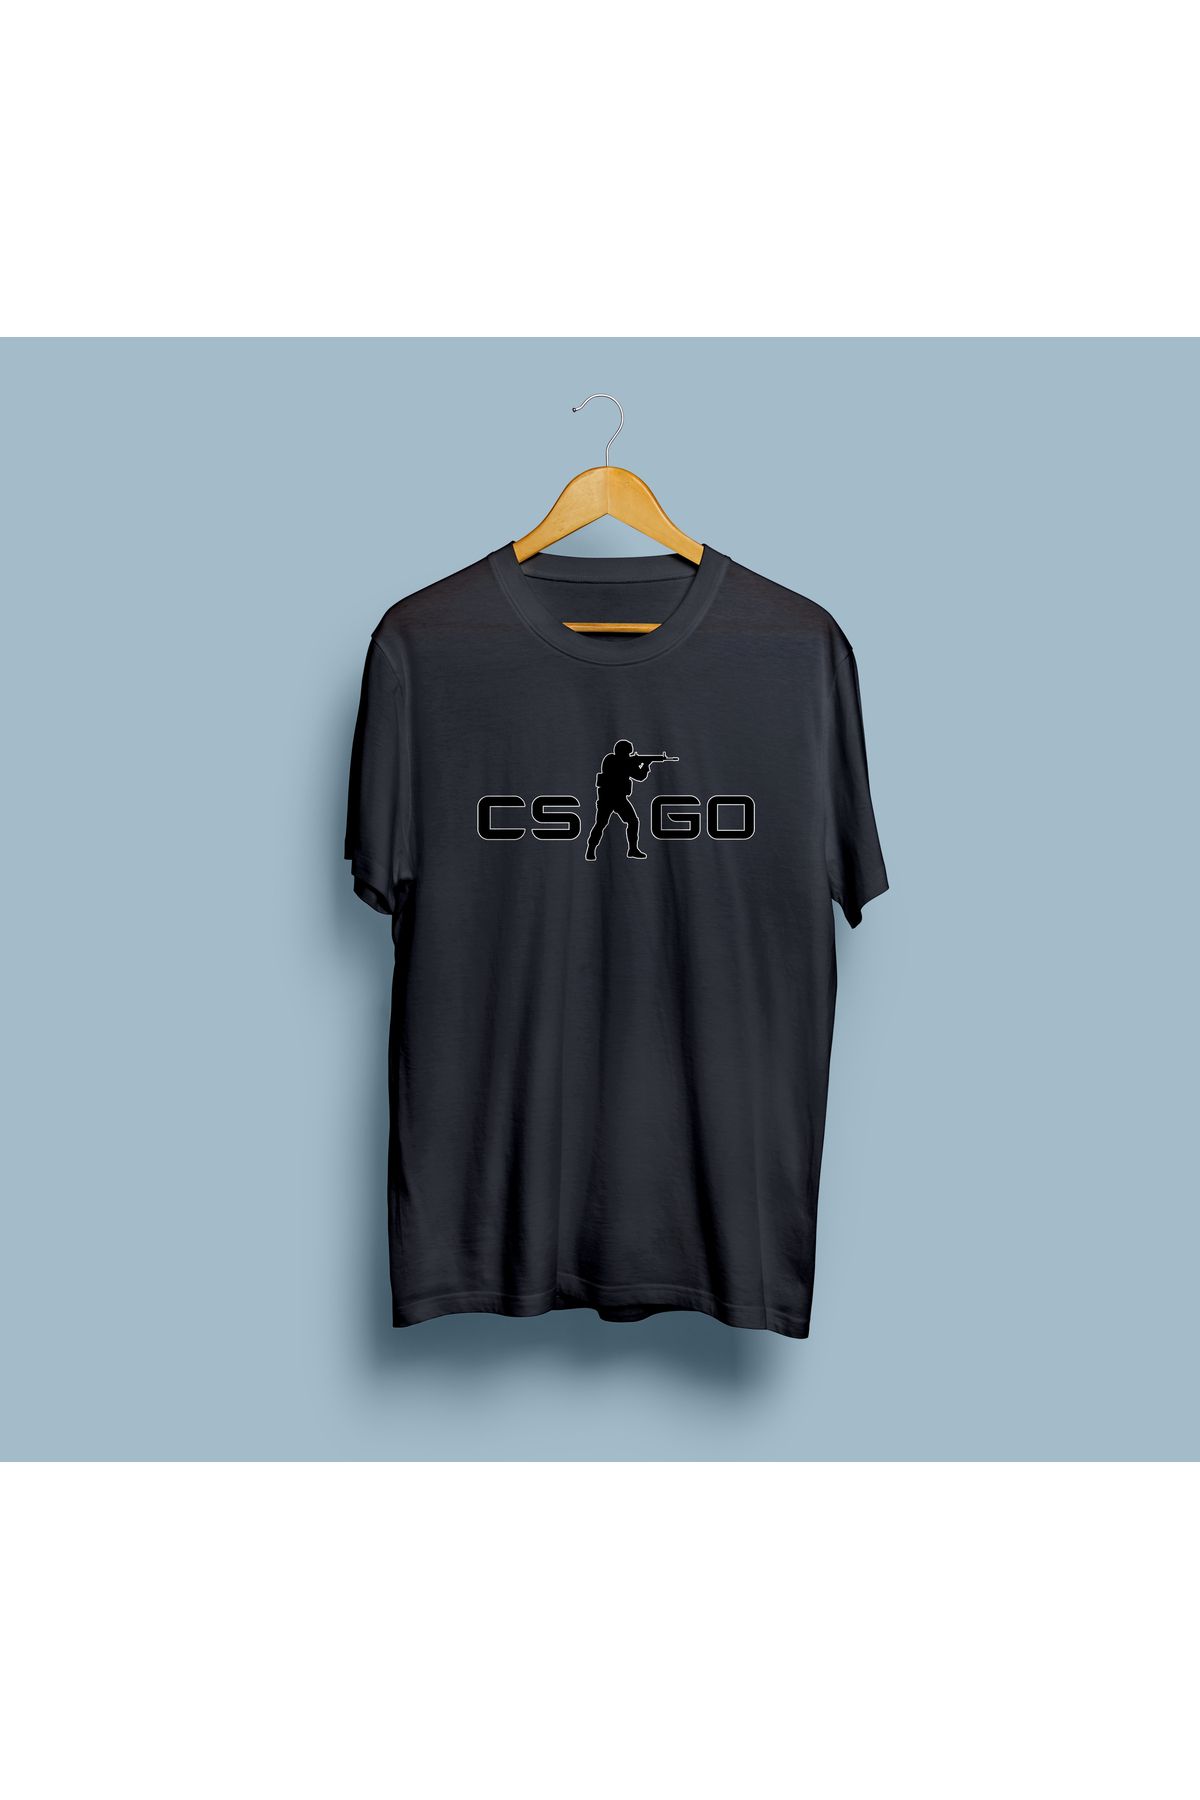 eioswear Oversize Counter-Strike: Global Offensive / Cs Go tasarım unisex T-shirt